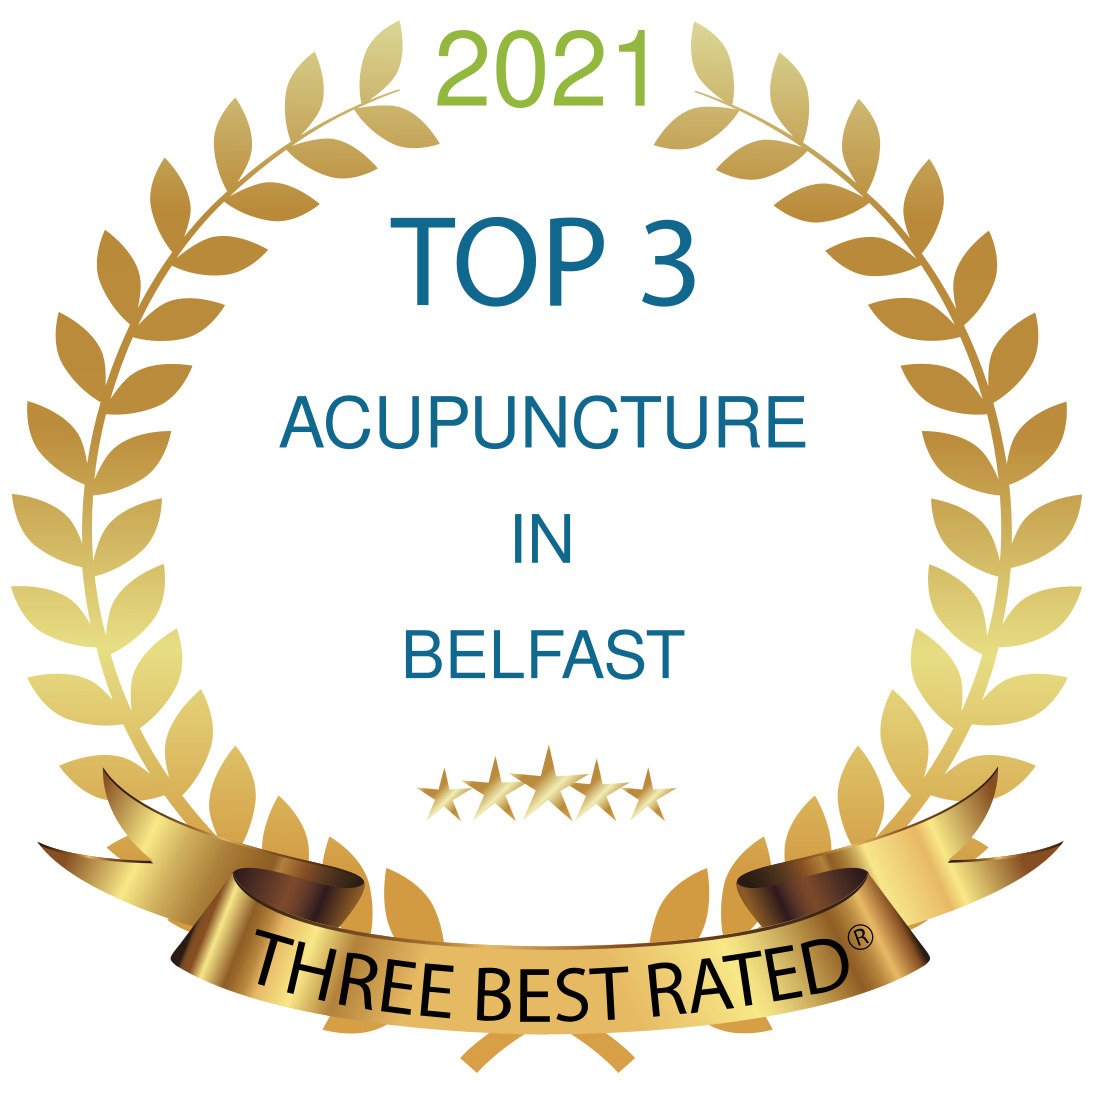 Top 3 Acupuncture in Belfast